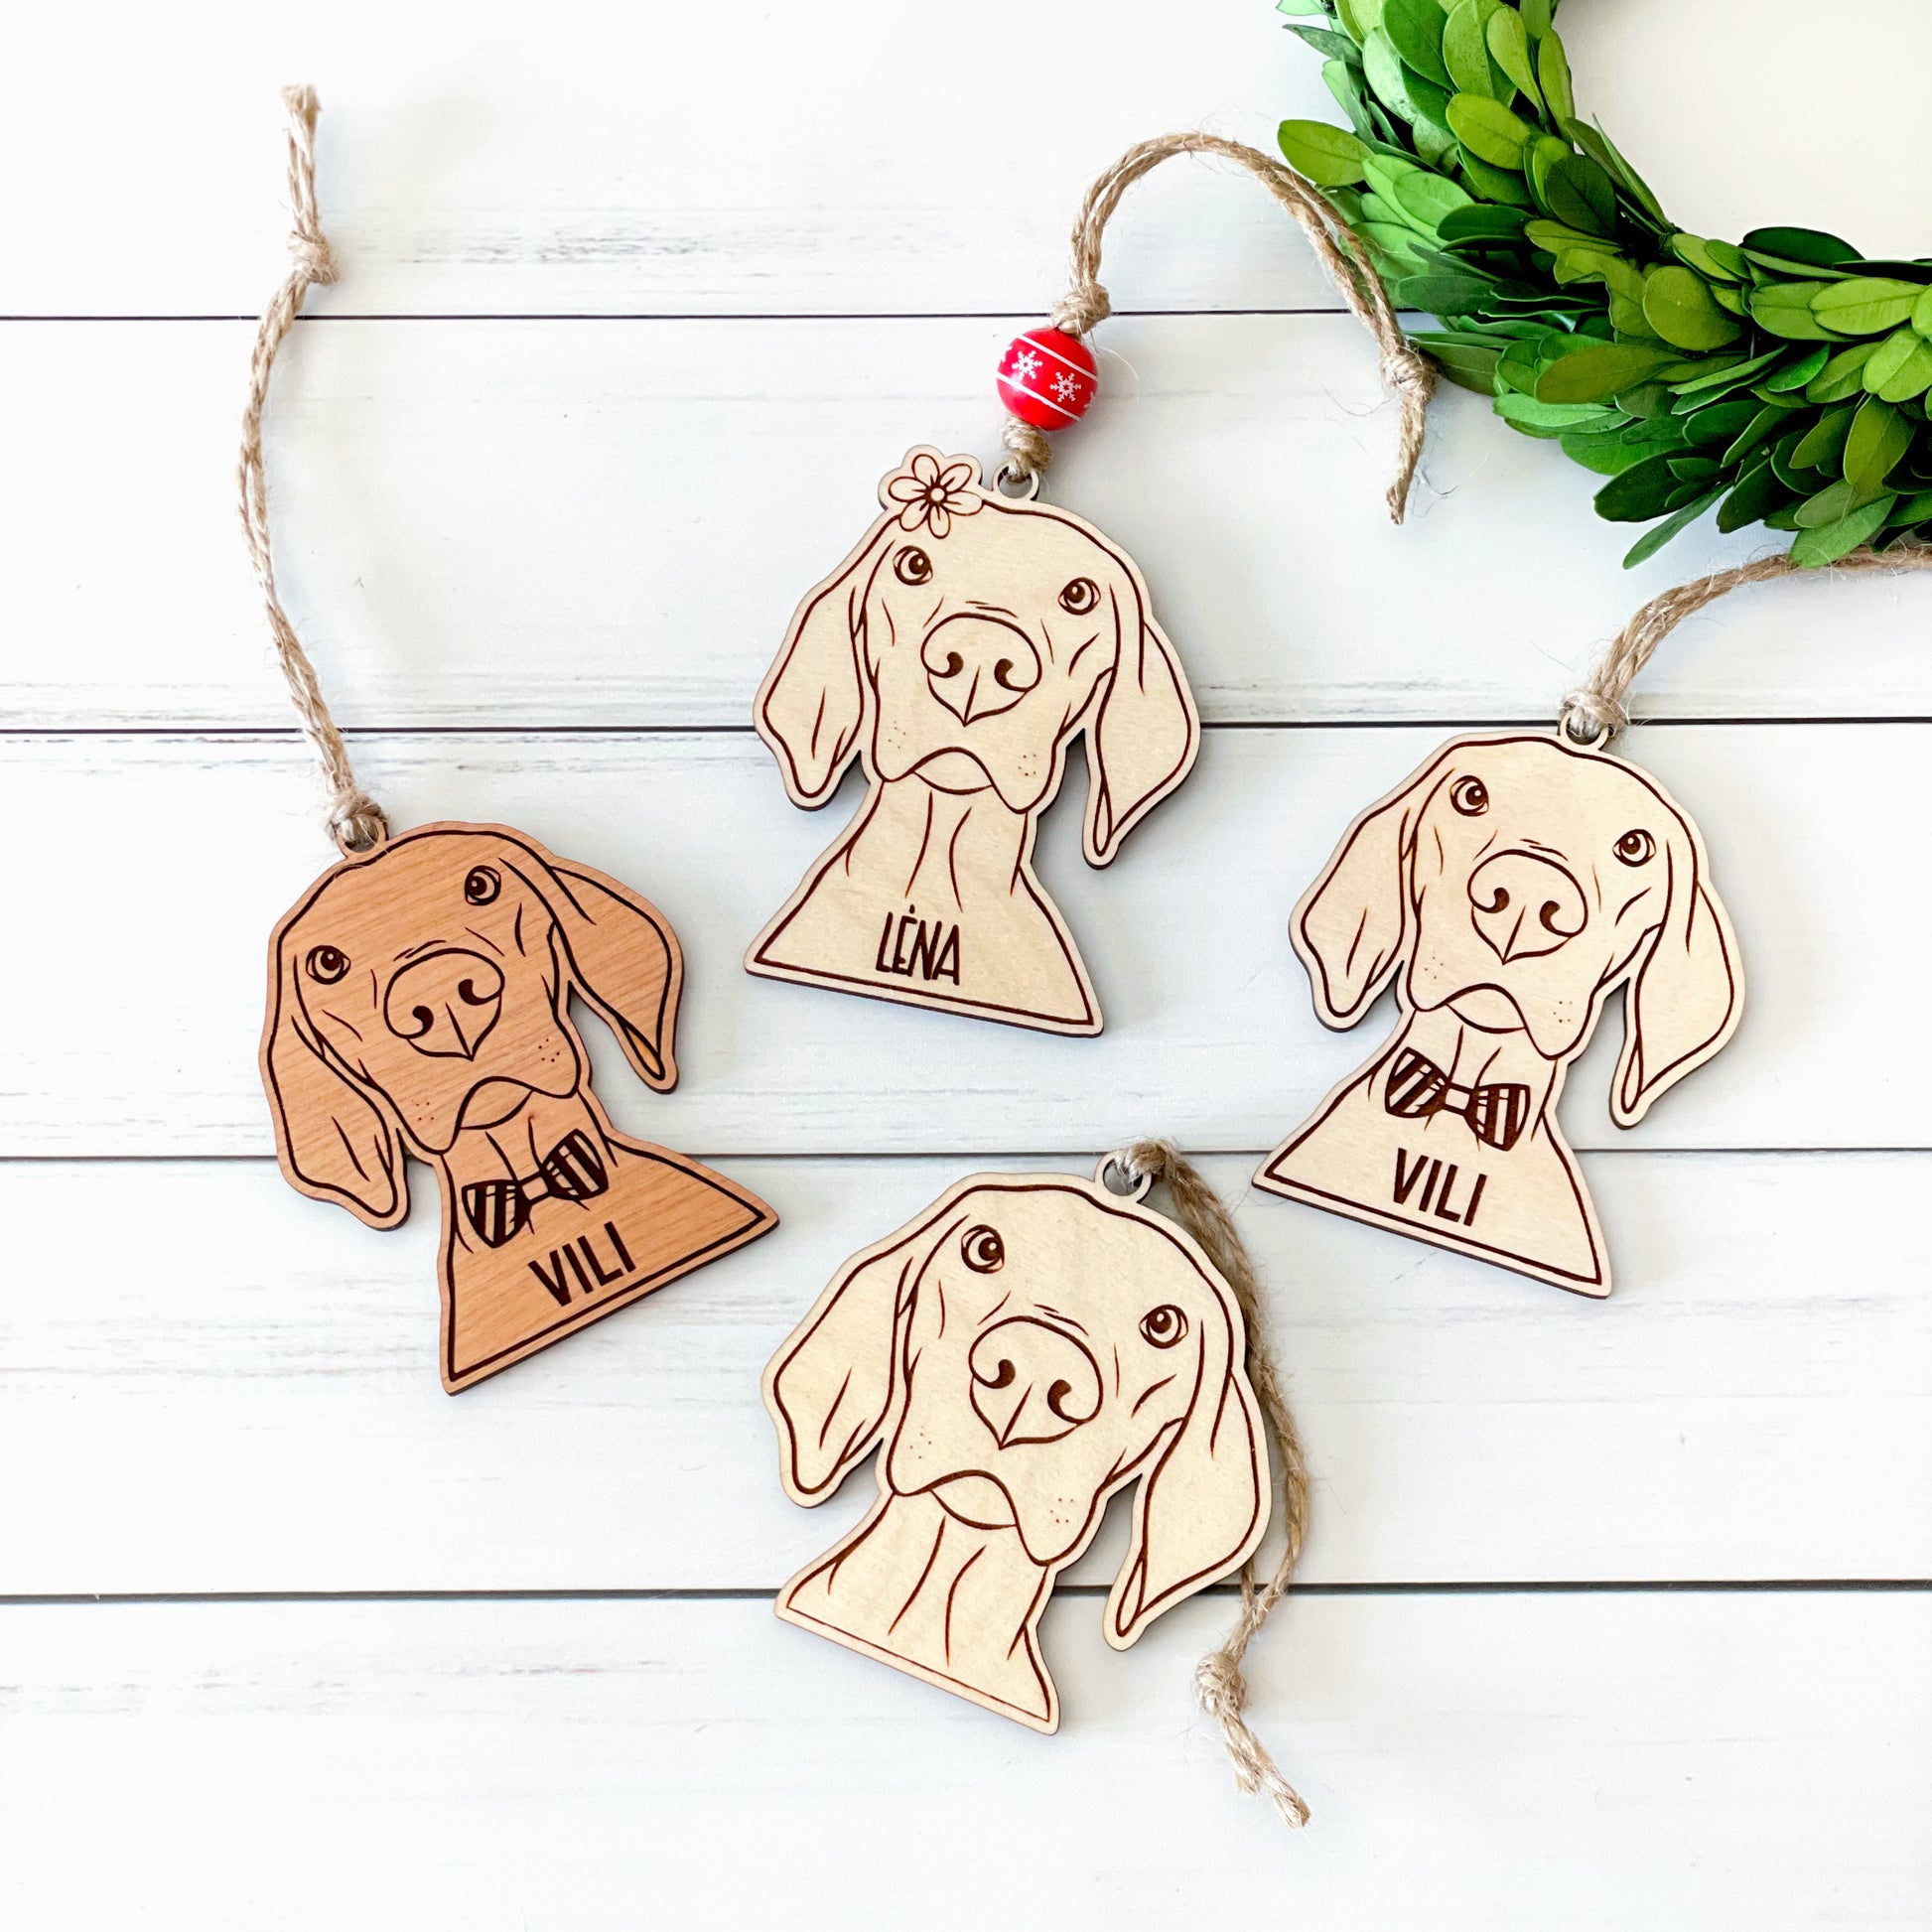 Vizsla ornament for pet parents, engraved personalized baltic birch or cherry ply wood ornament